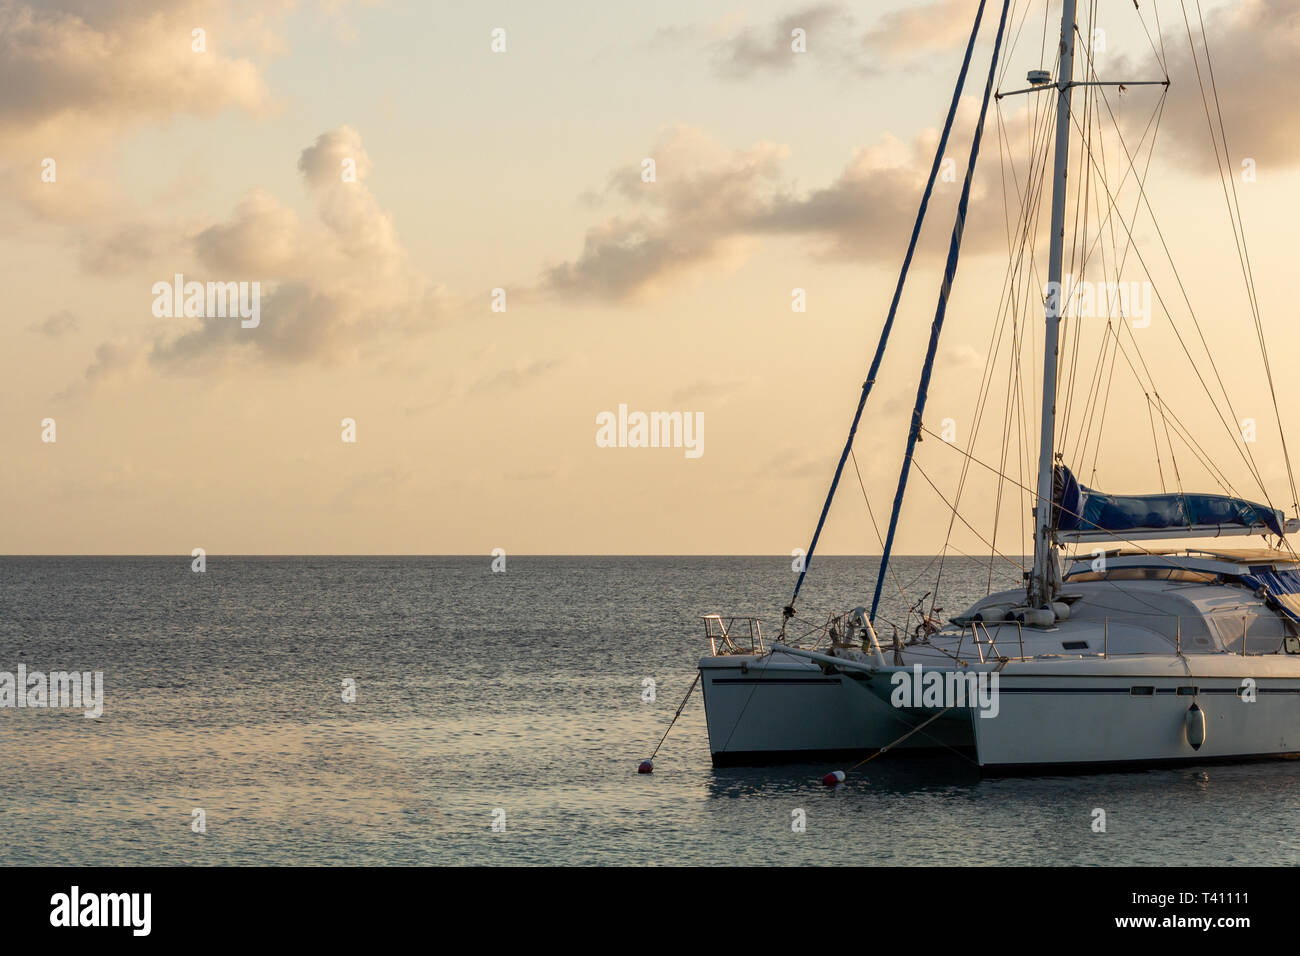 Catamaran boat in the Carribean sea at sunset Stock Photo